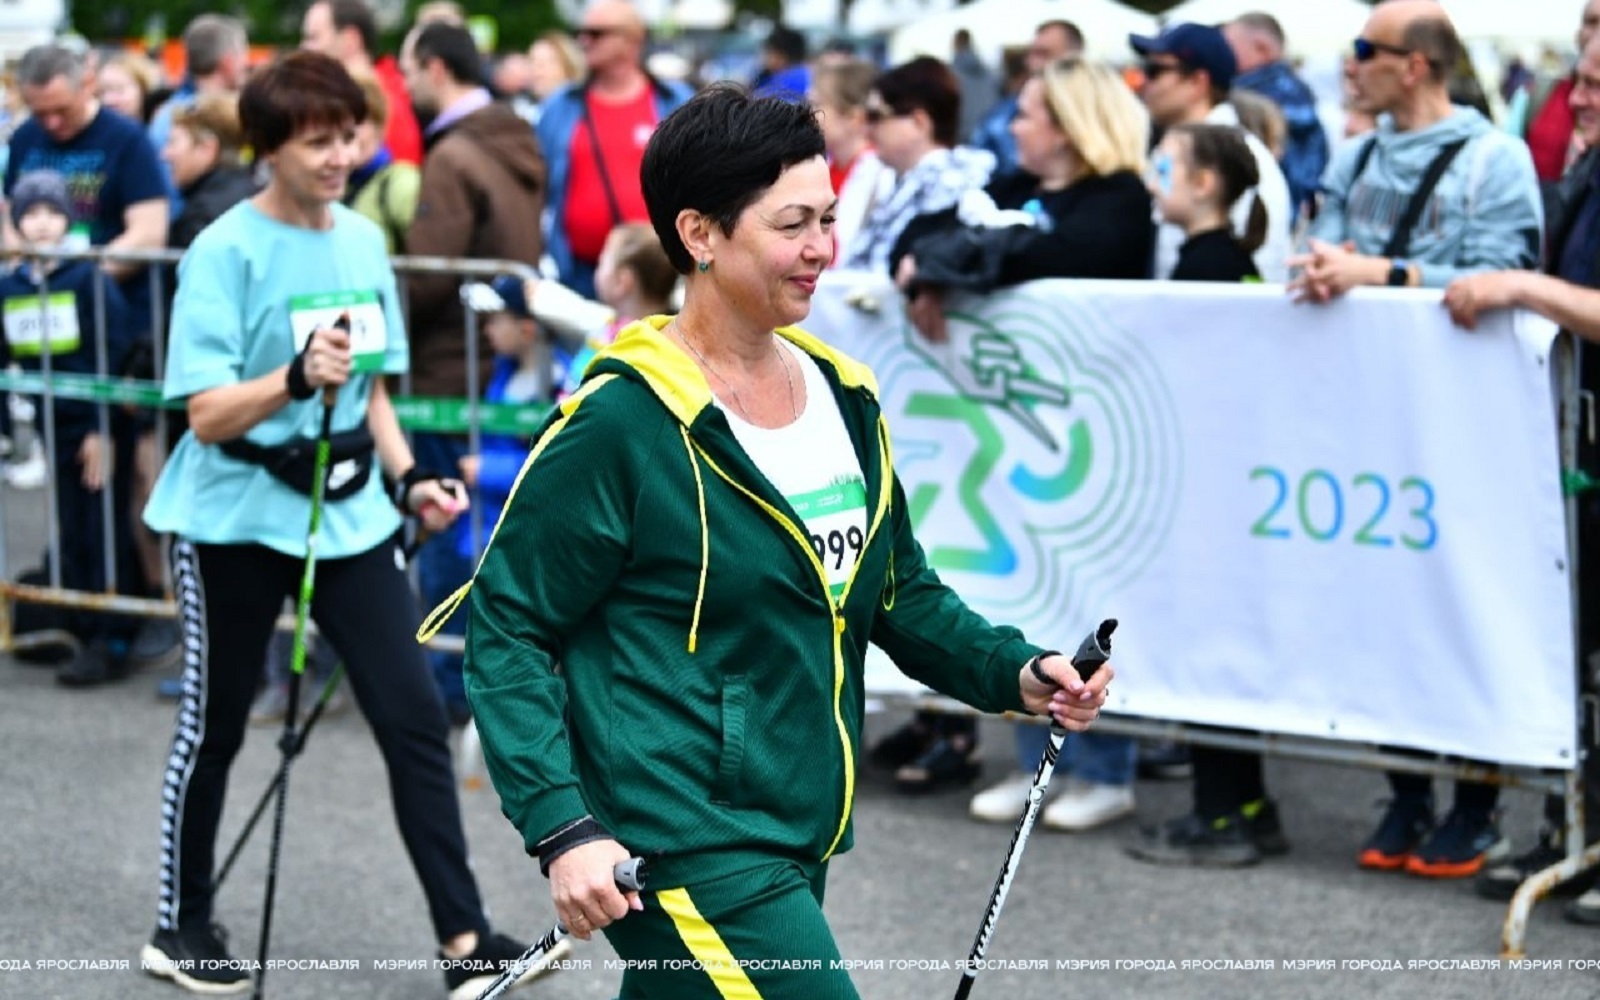 Yaroslavl hosted the Green Marathon 2023